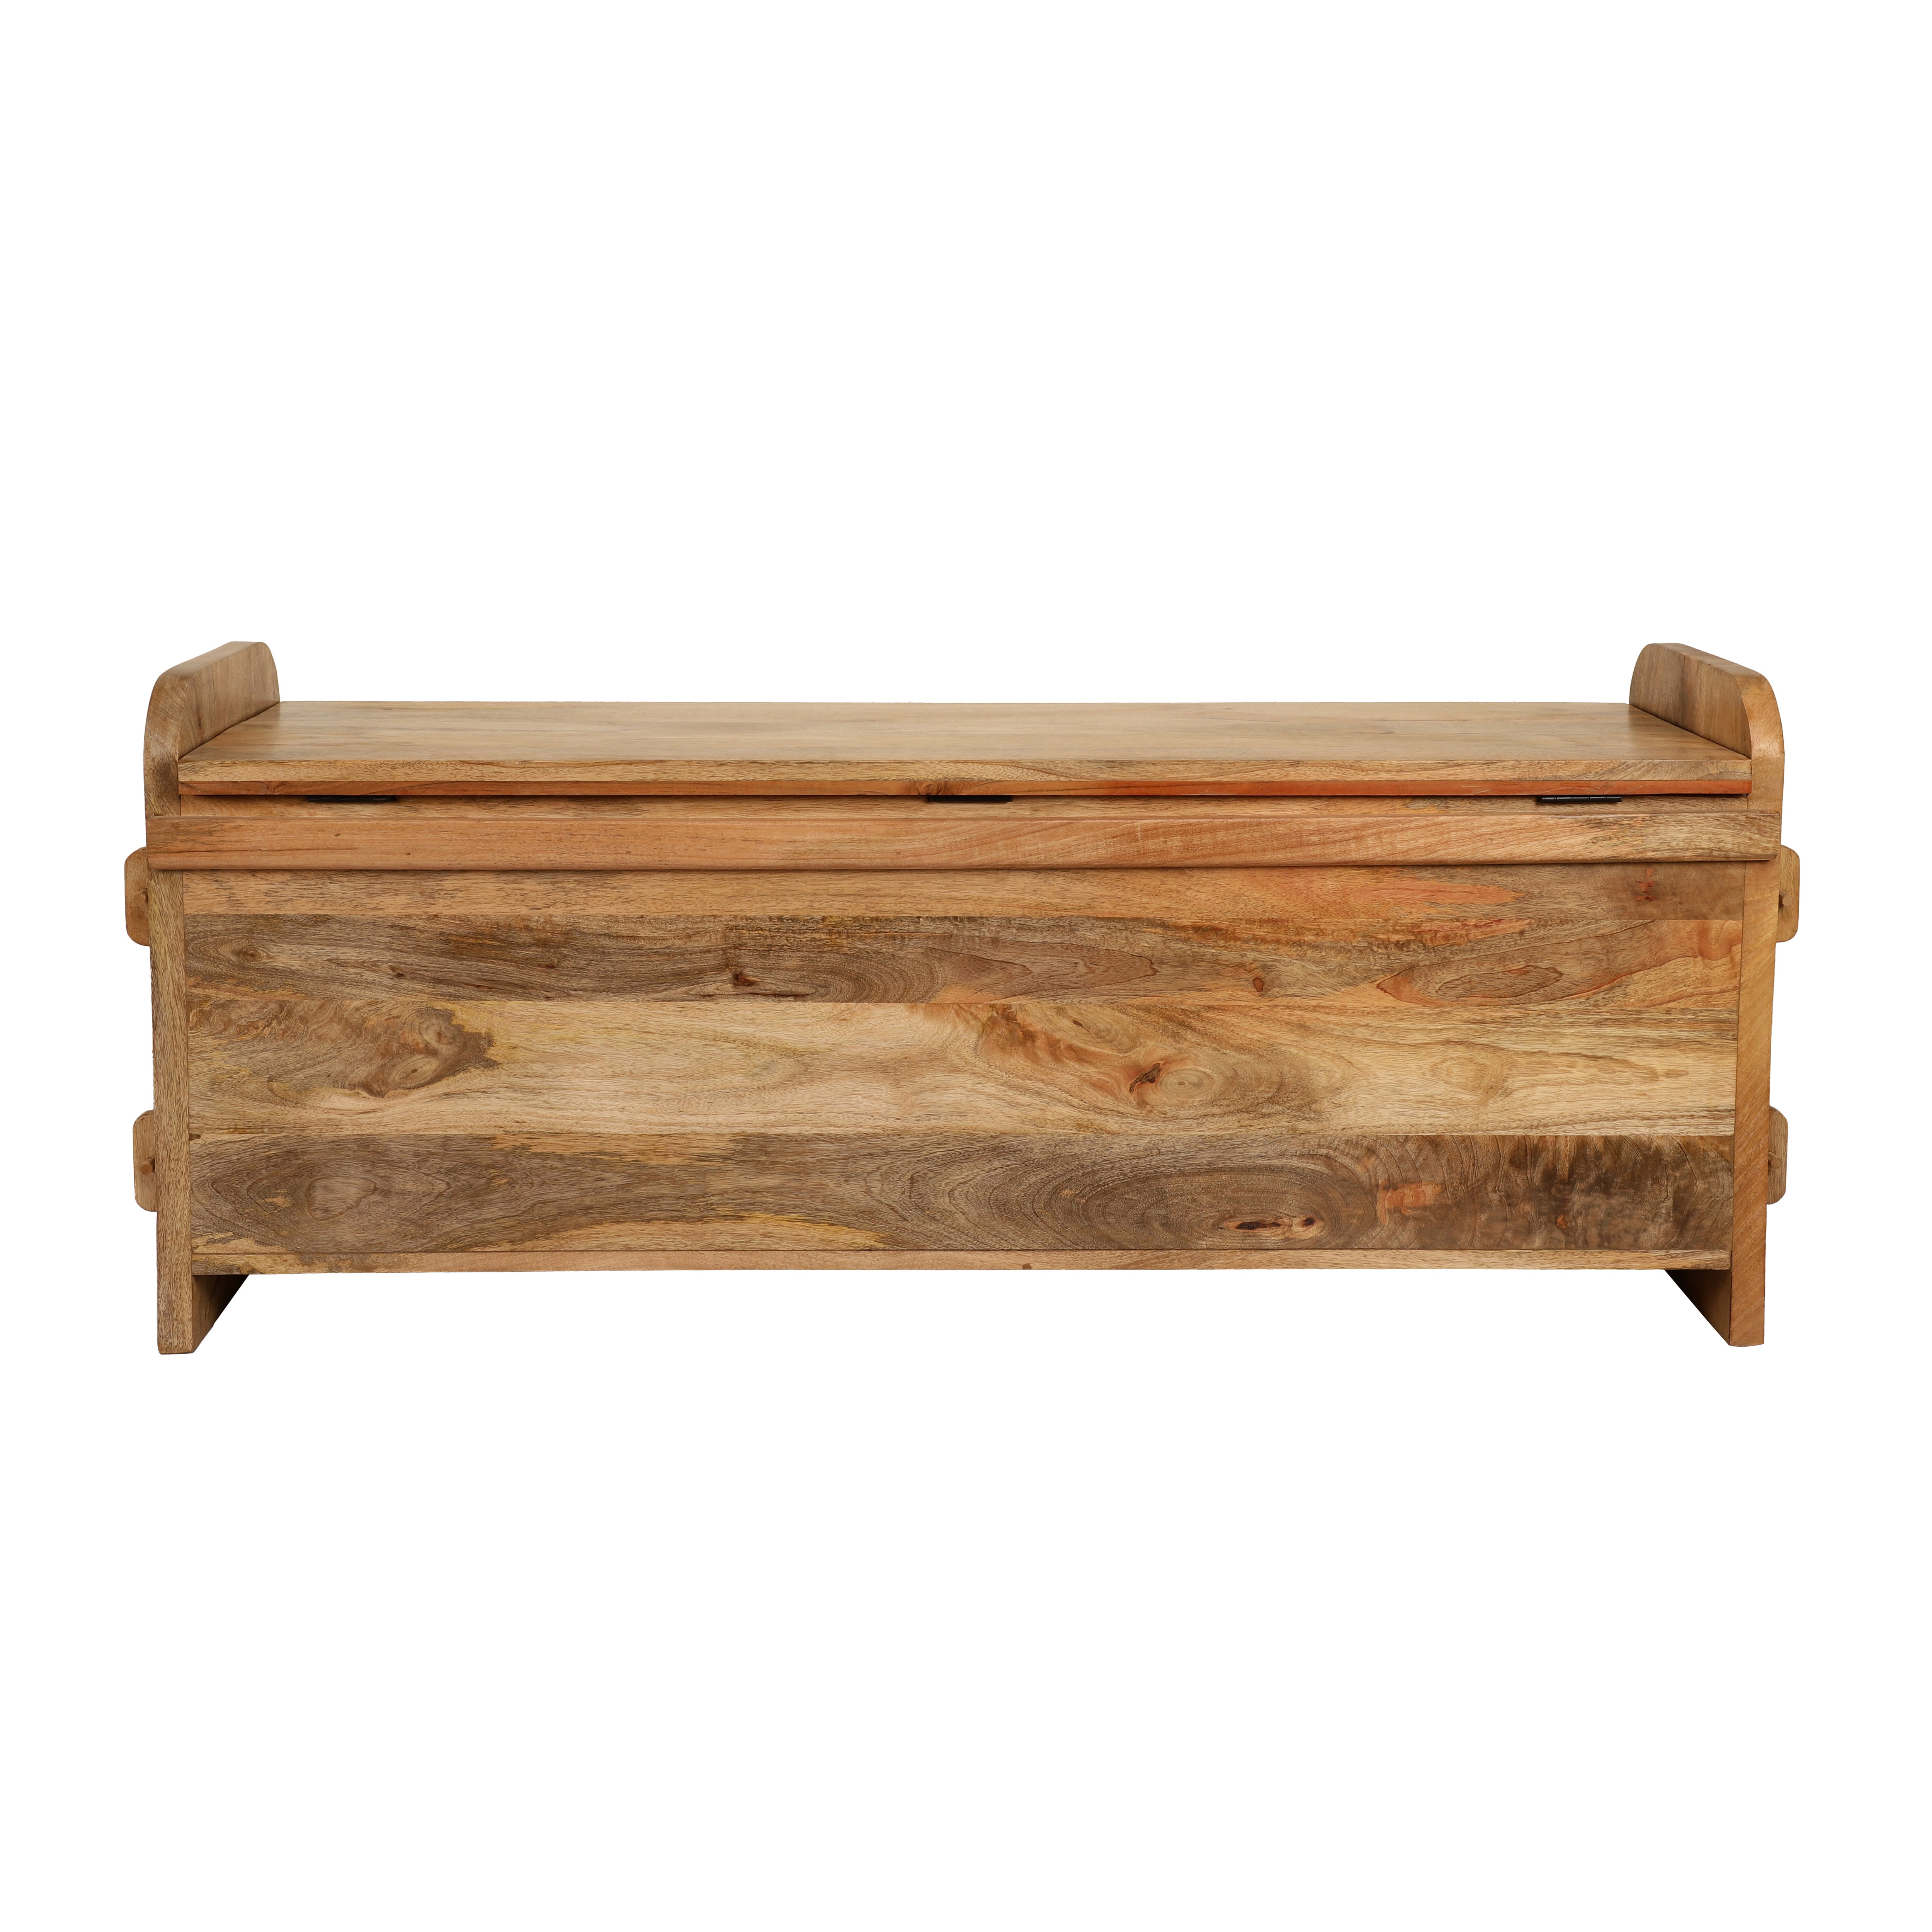 Carved Wooden Storage Box/Bench